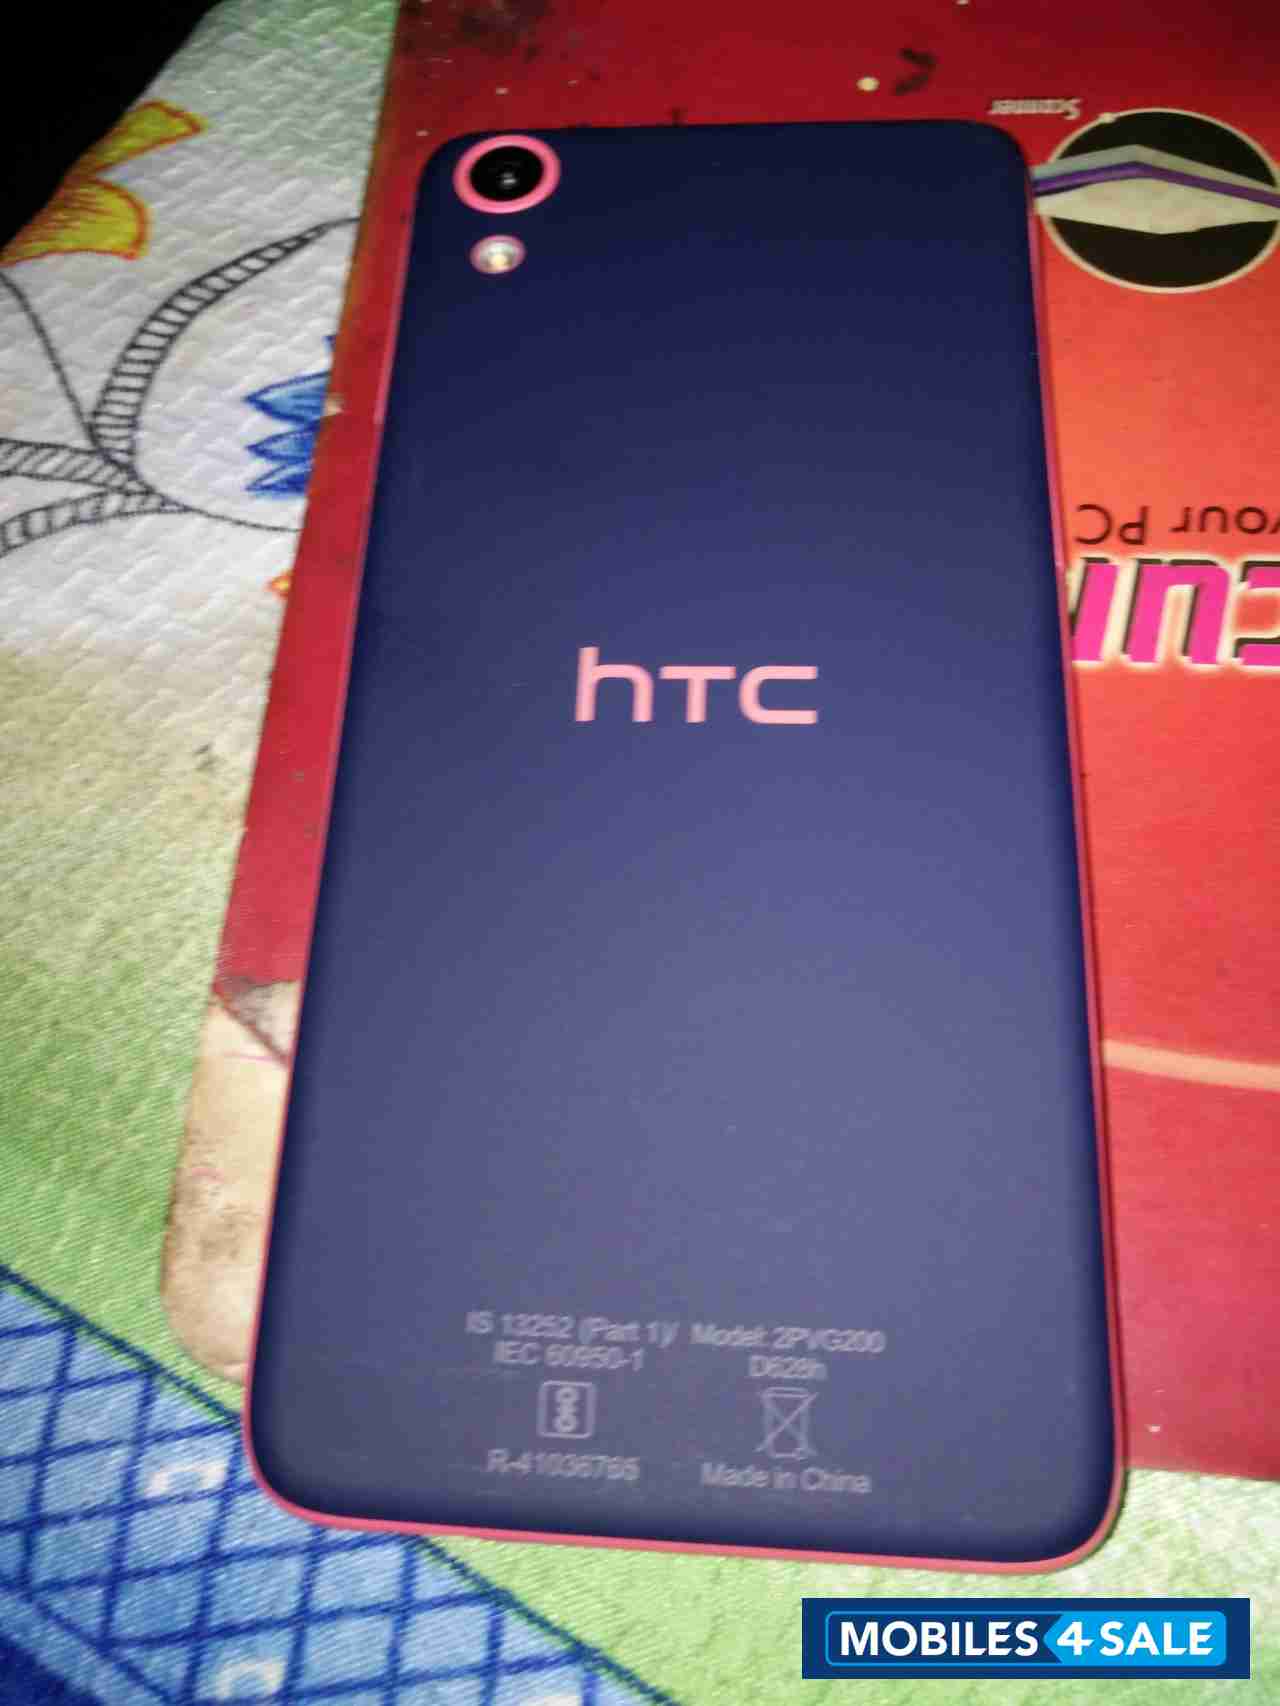 Black With Red Orange HTC Desire 828 Dual SIM